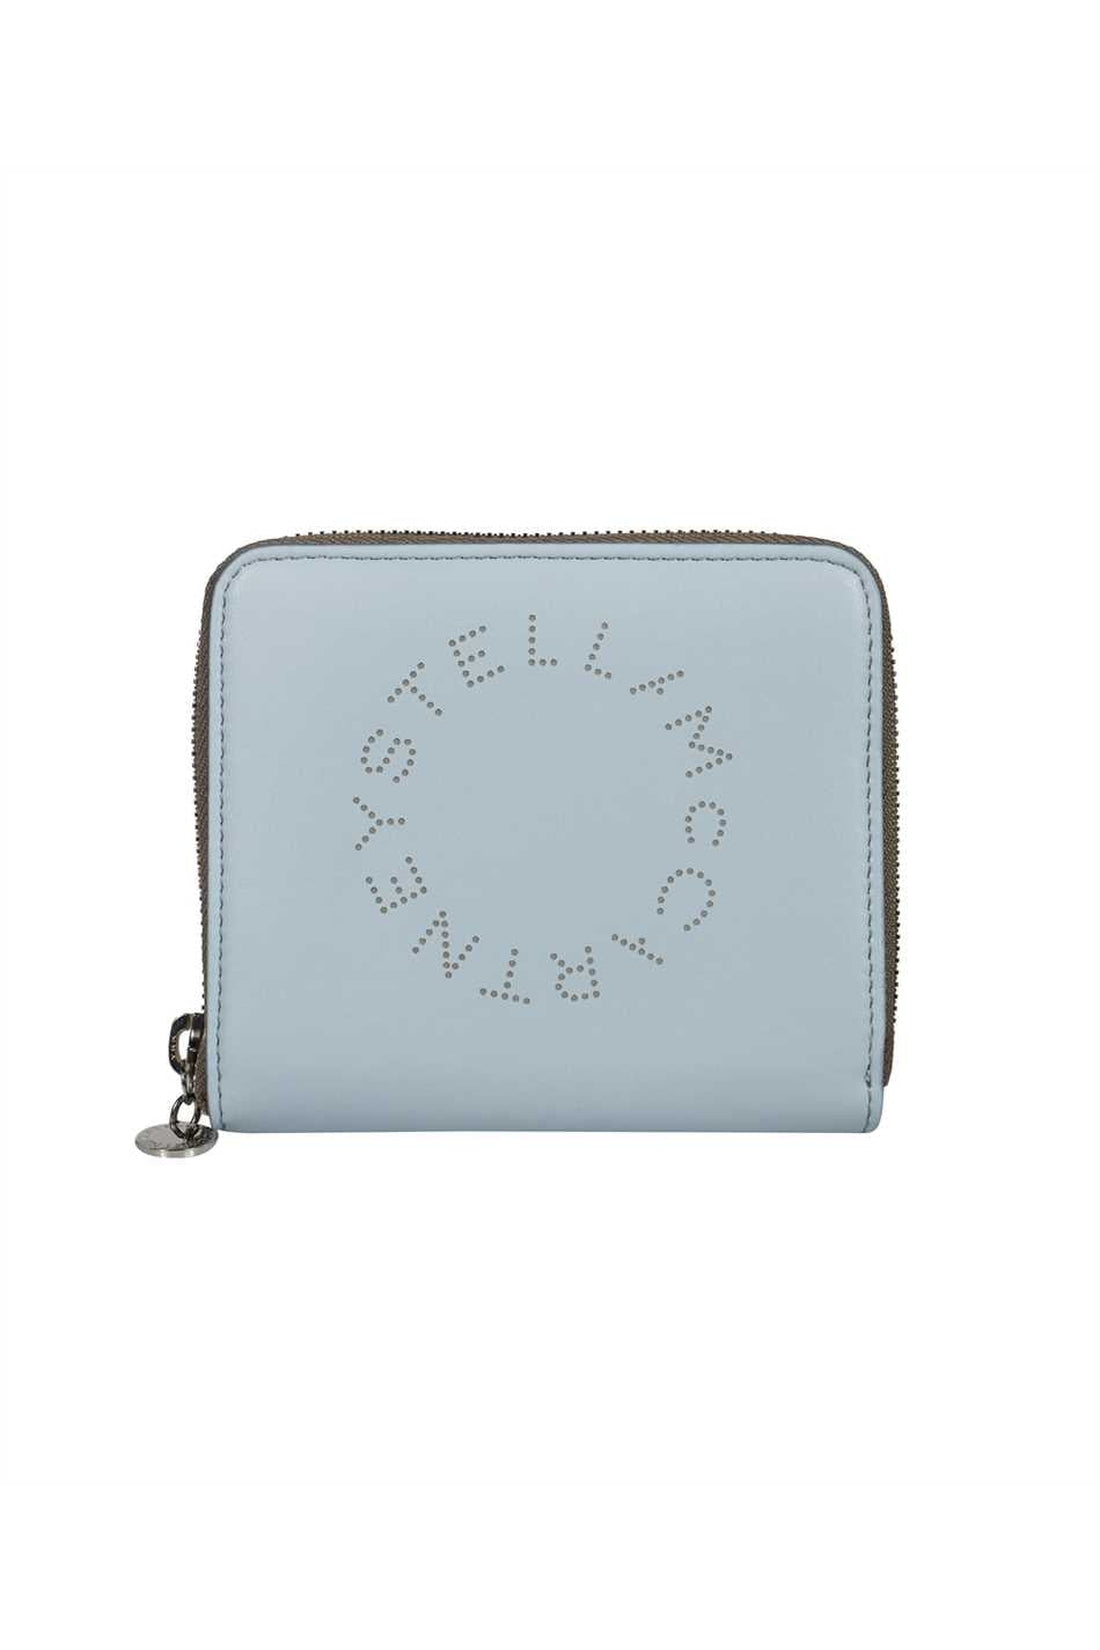 Stella McCartney-OUTLET-SALE-Stella Logo Alter-Nappa wallet-ARCHIVIST